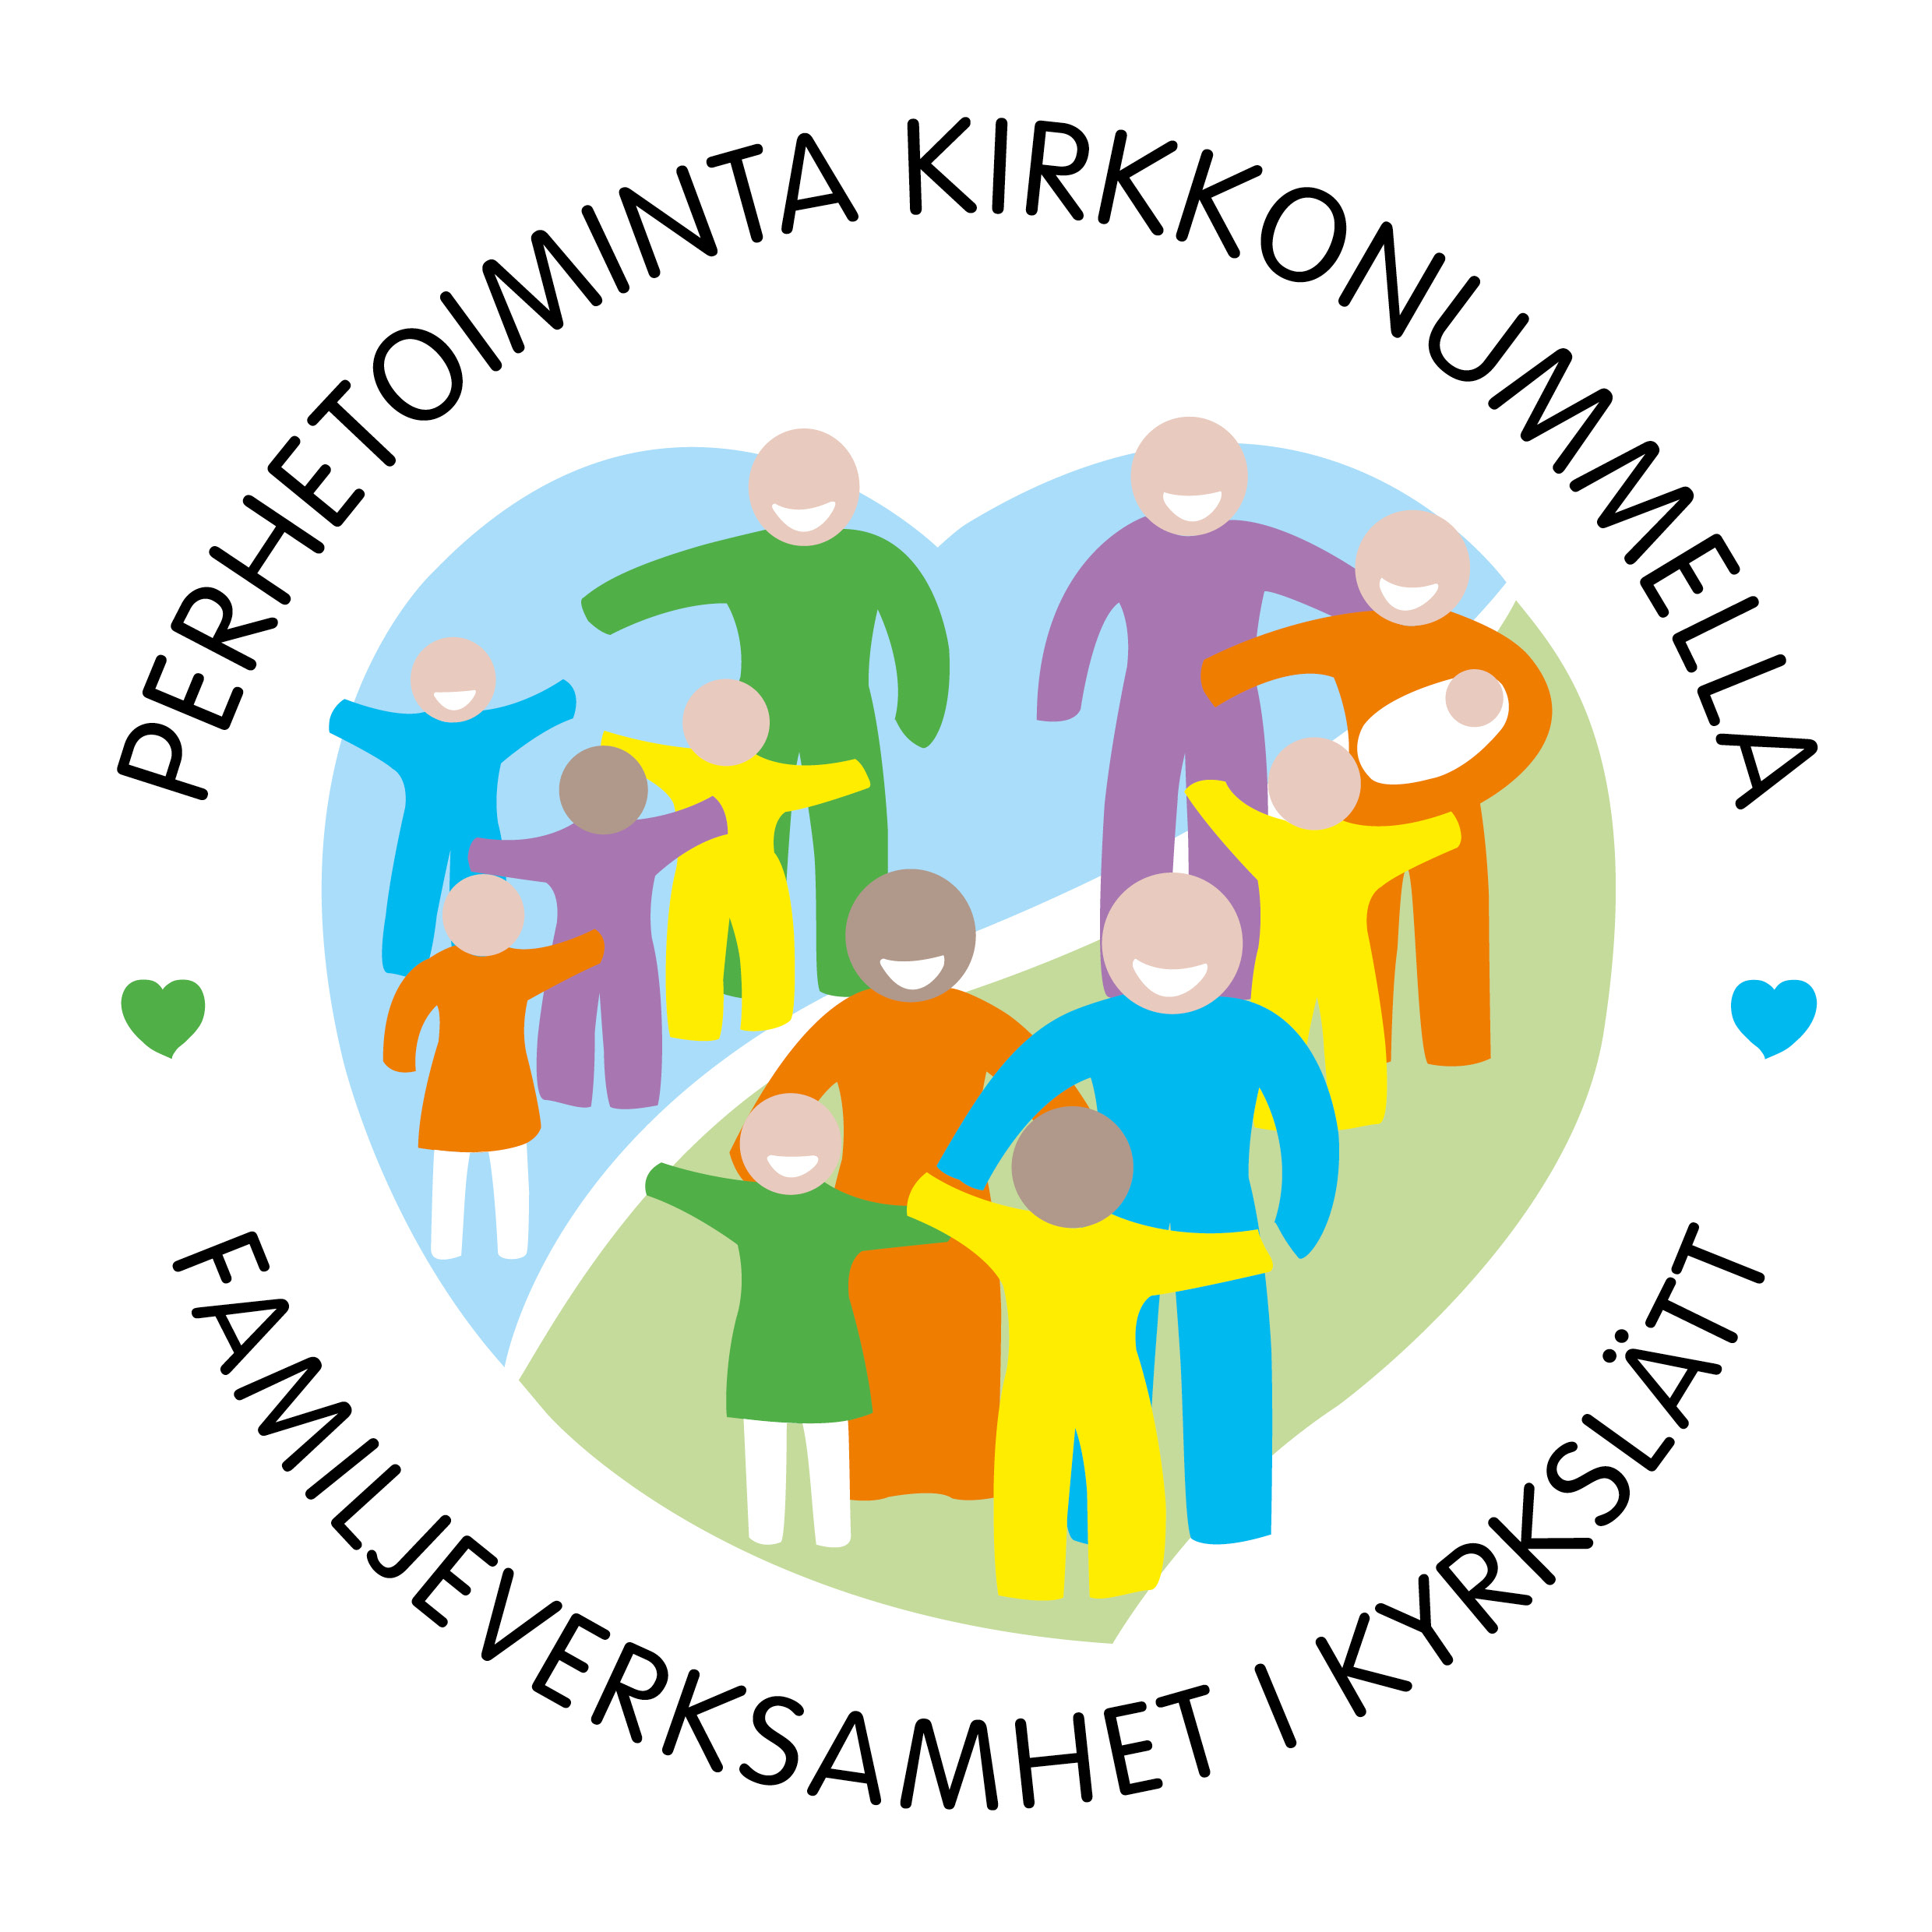 Familjeverksamhet i Kyrkslätt -logo © Anne Kallvig